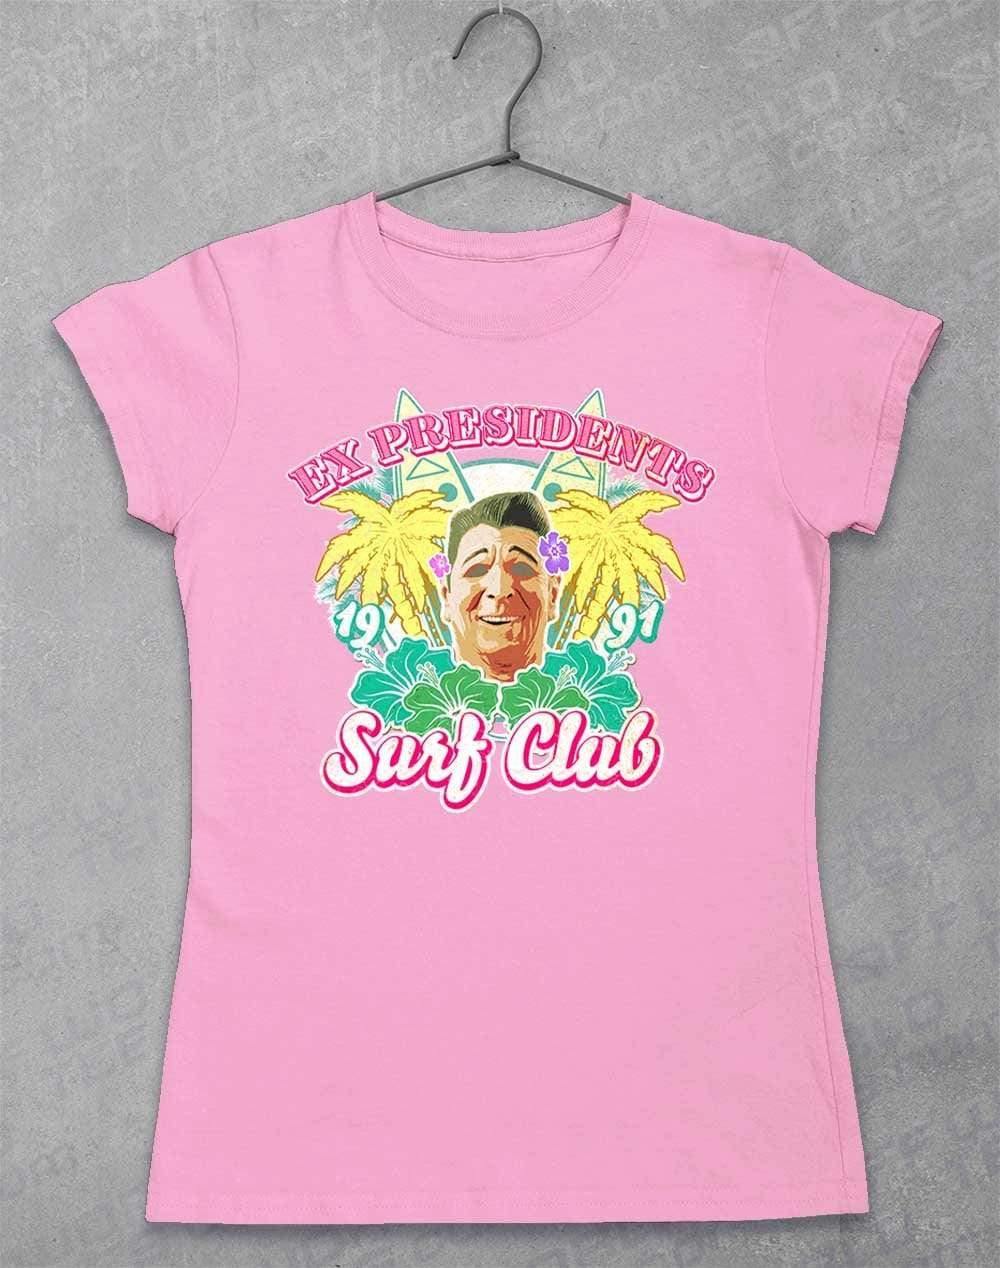 Ex Presidents Surf Club Womens T-Shirt 8-10 / Light Pink  - Off World Tees